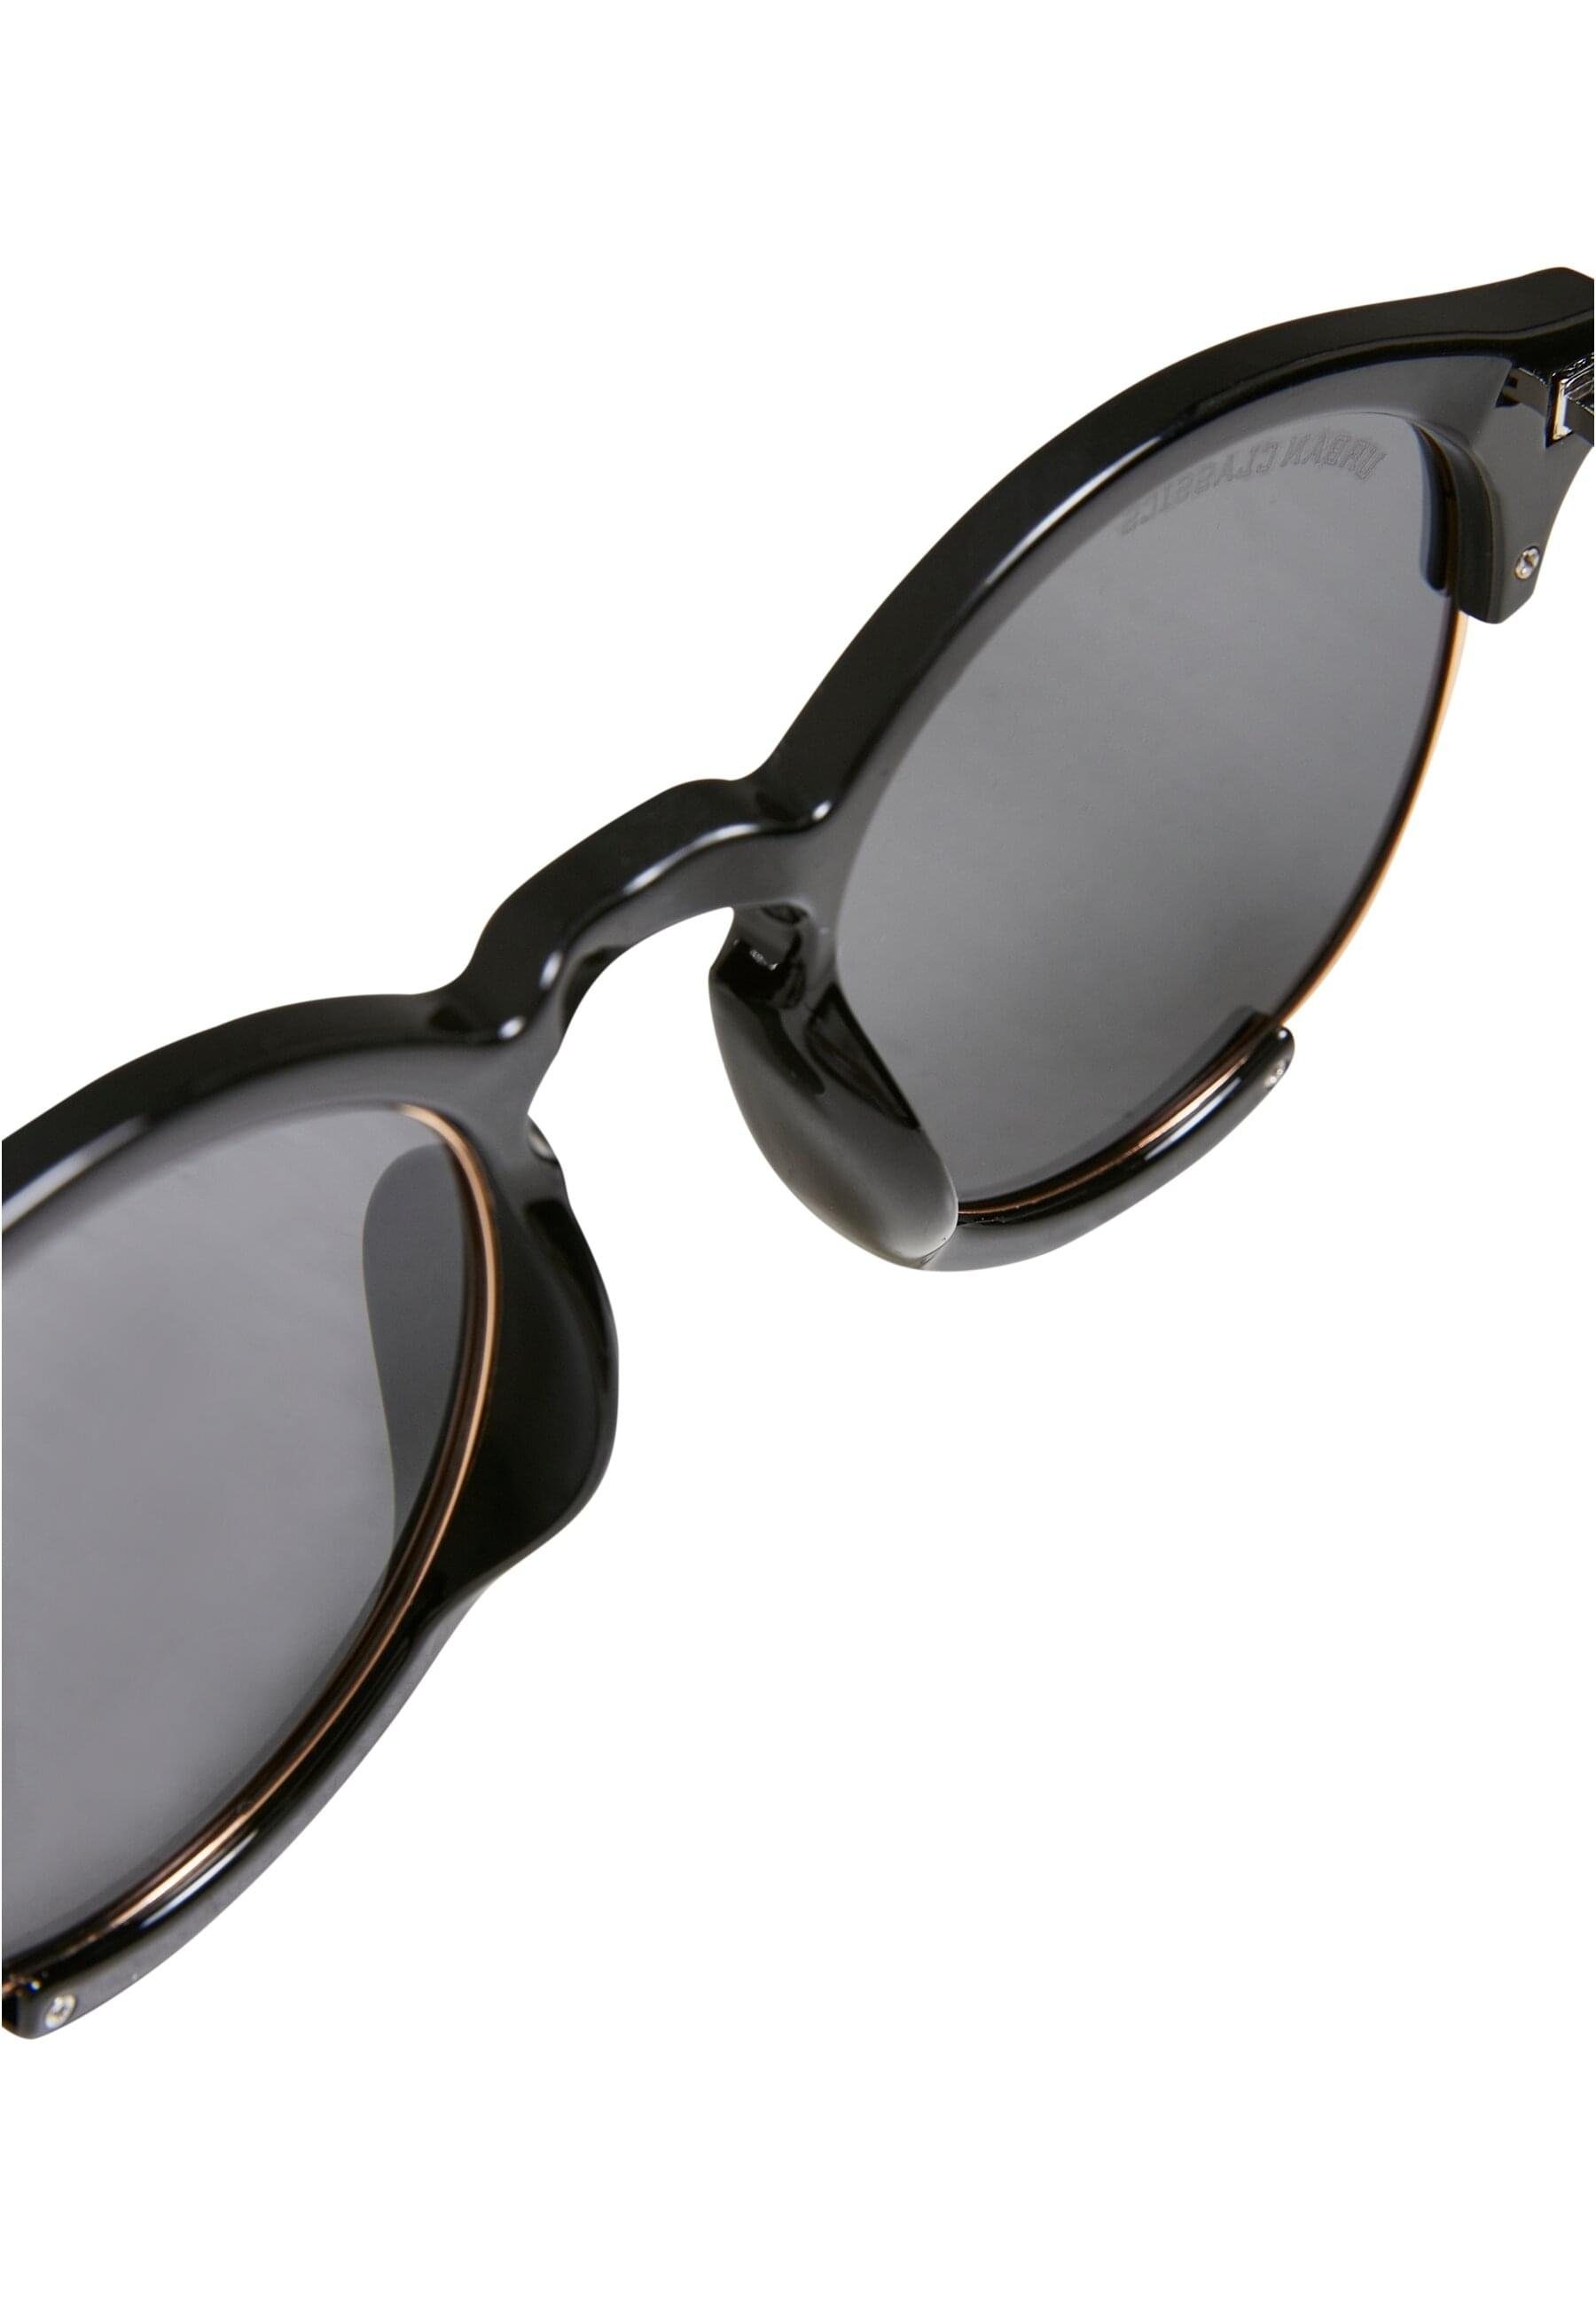 Sonnenbrille CLASSICS Bay URBAN black Unisex Coral Sunglasses